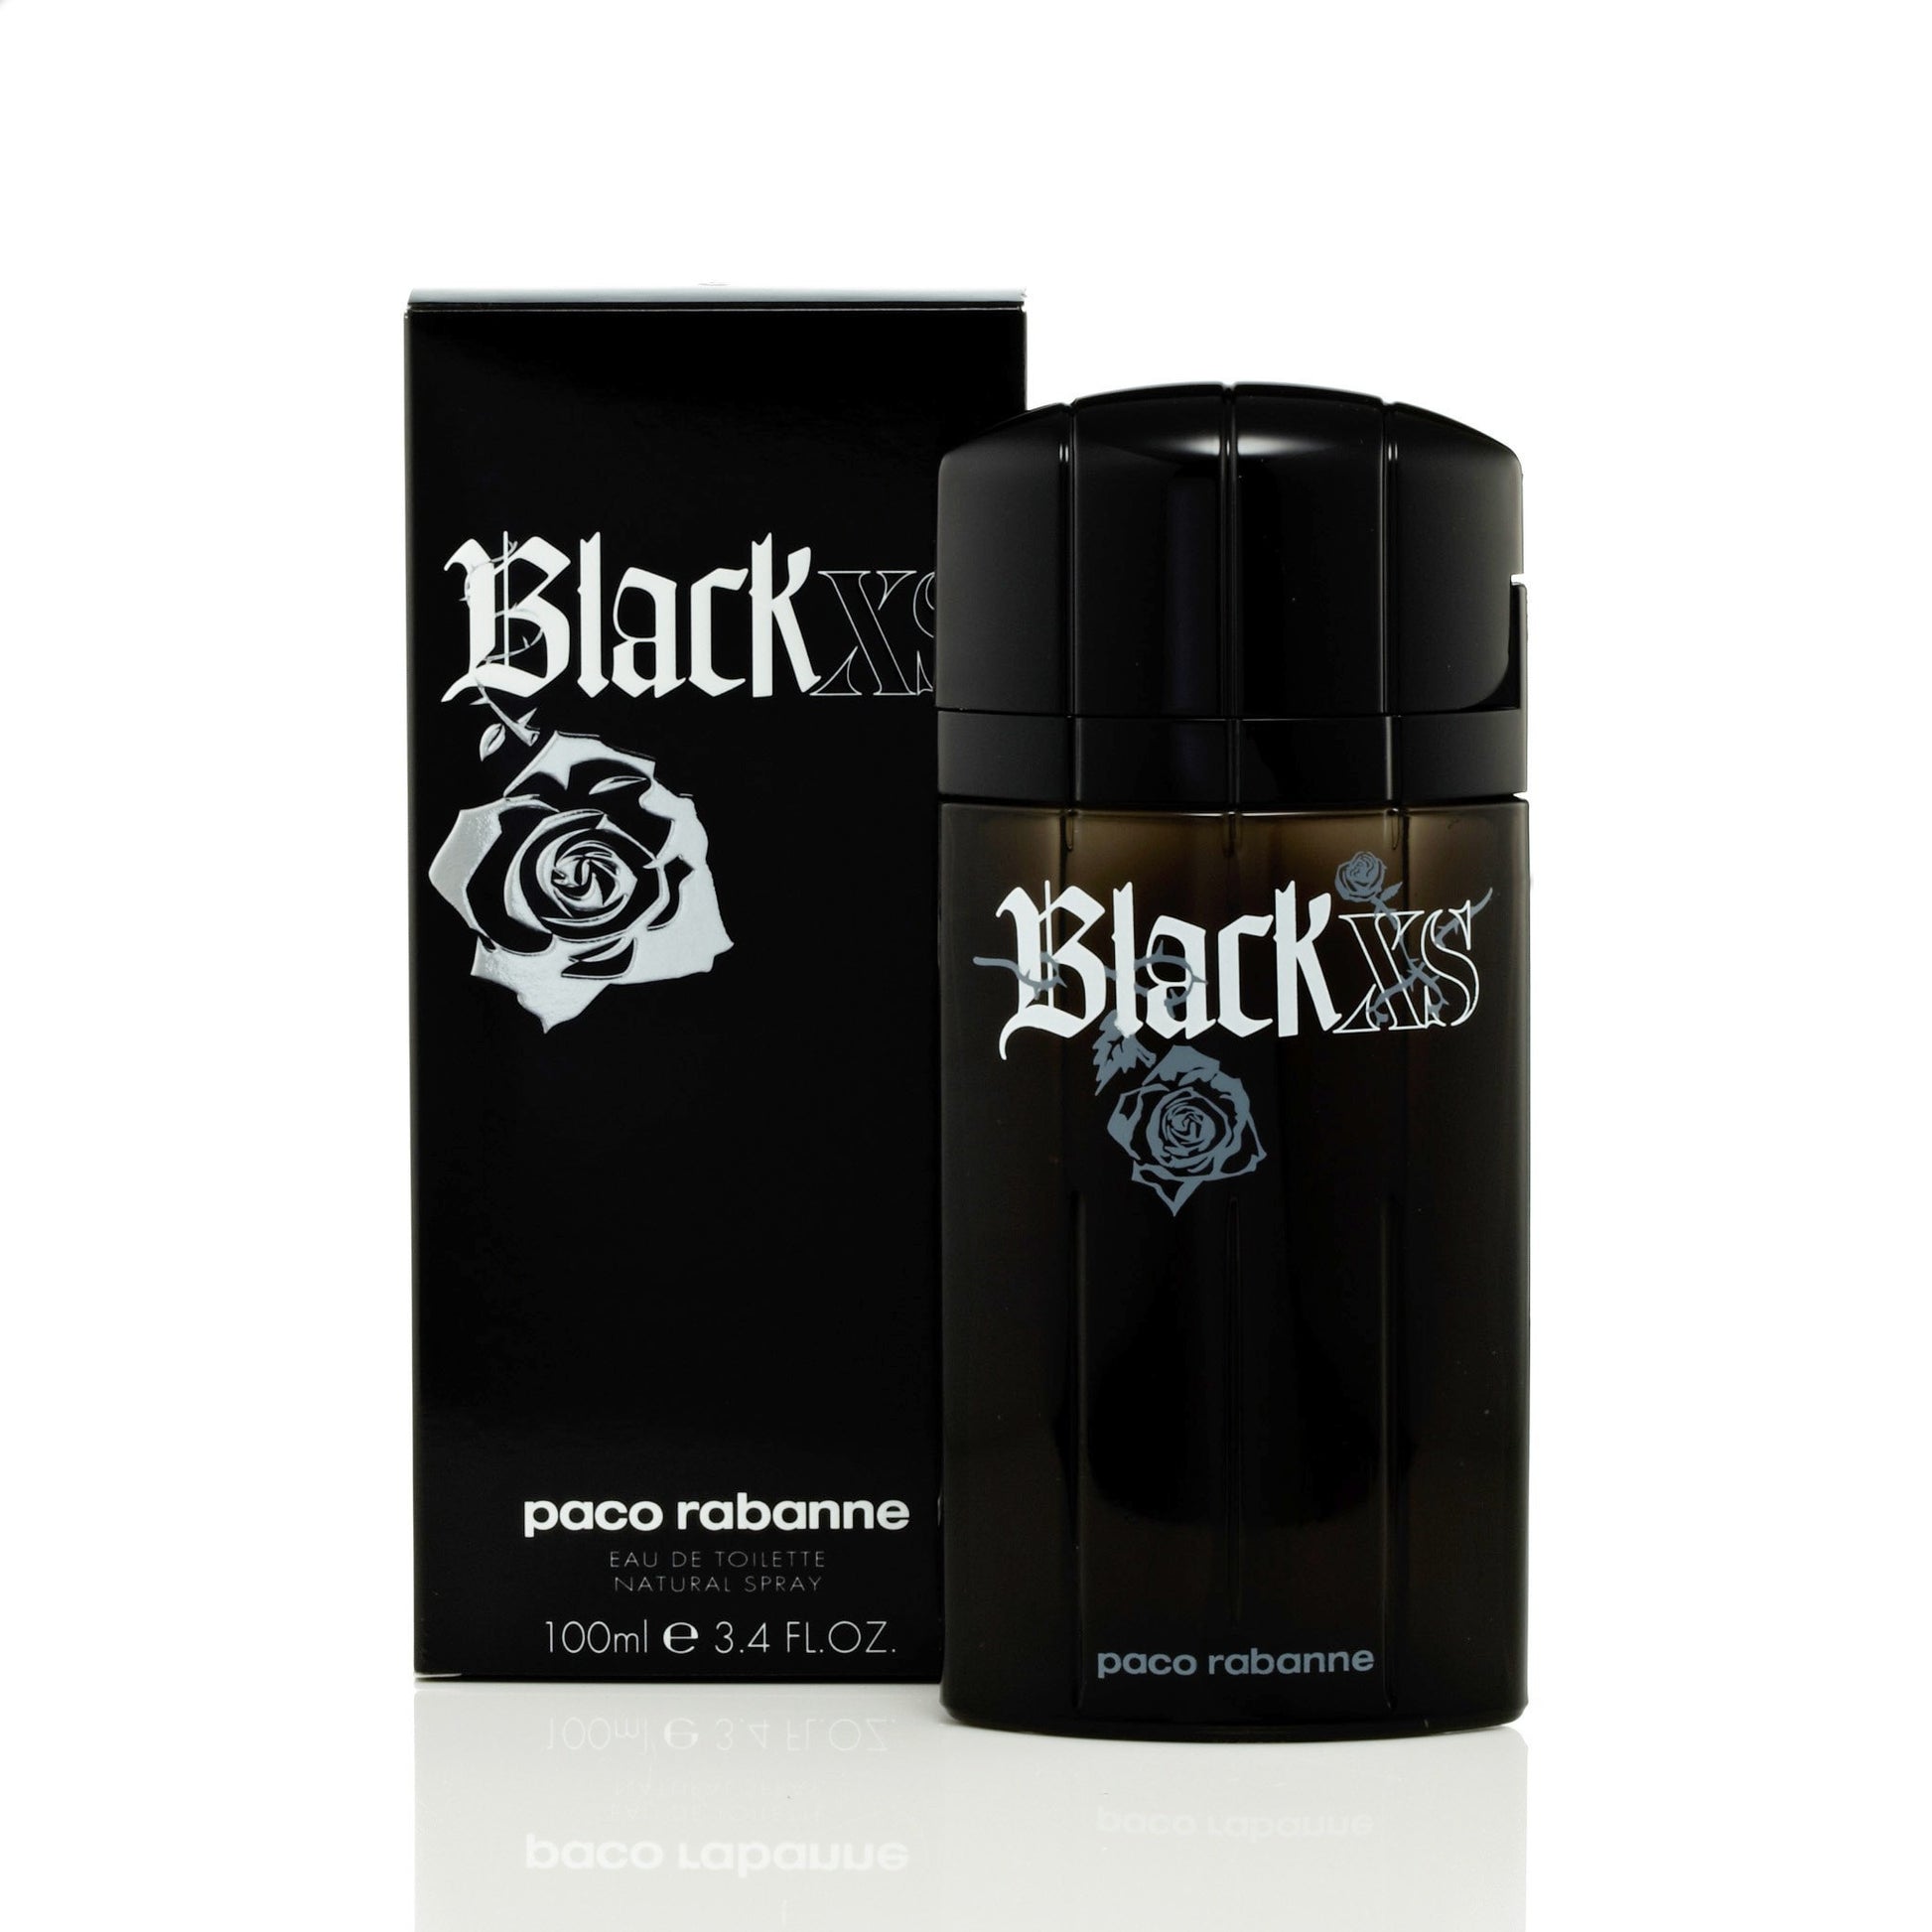 XS Black Eau de Toilette Spray for Men by Paco Rabanne 3.4 oz. Click to open in modal